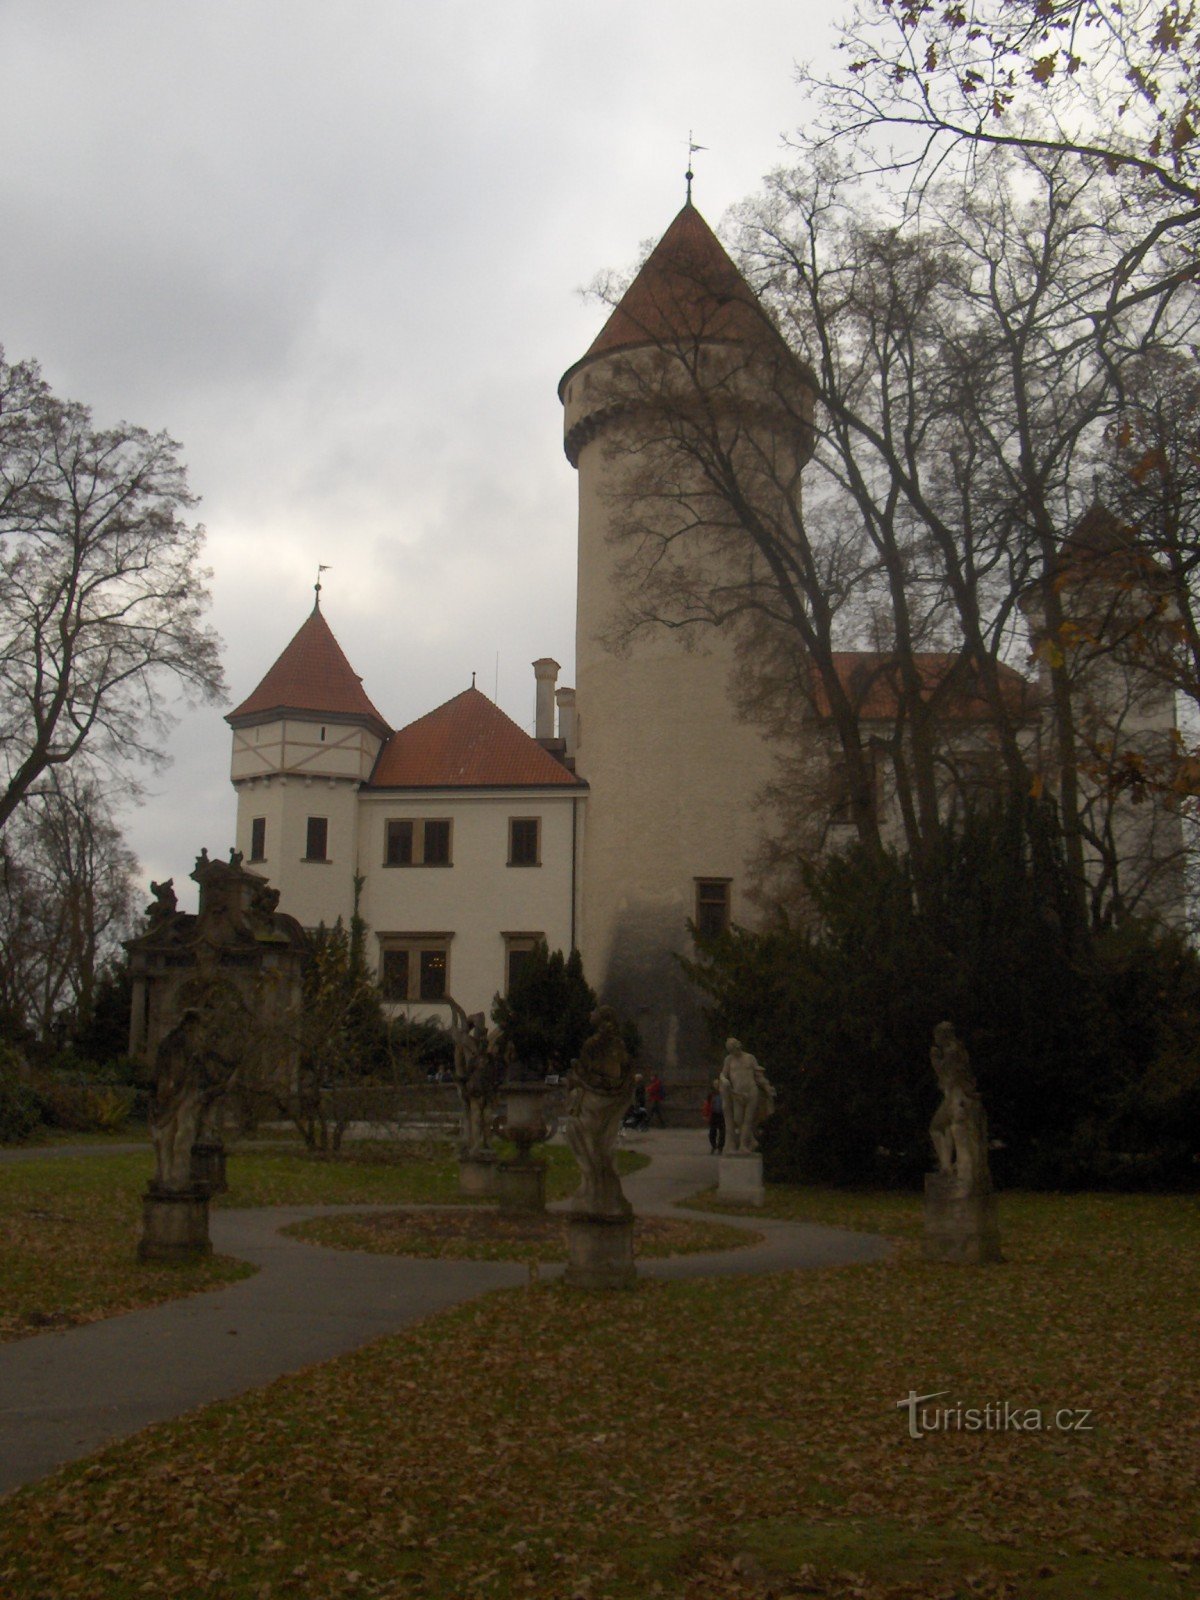 Foglie cadute intorno al castello di Konopiště.